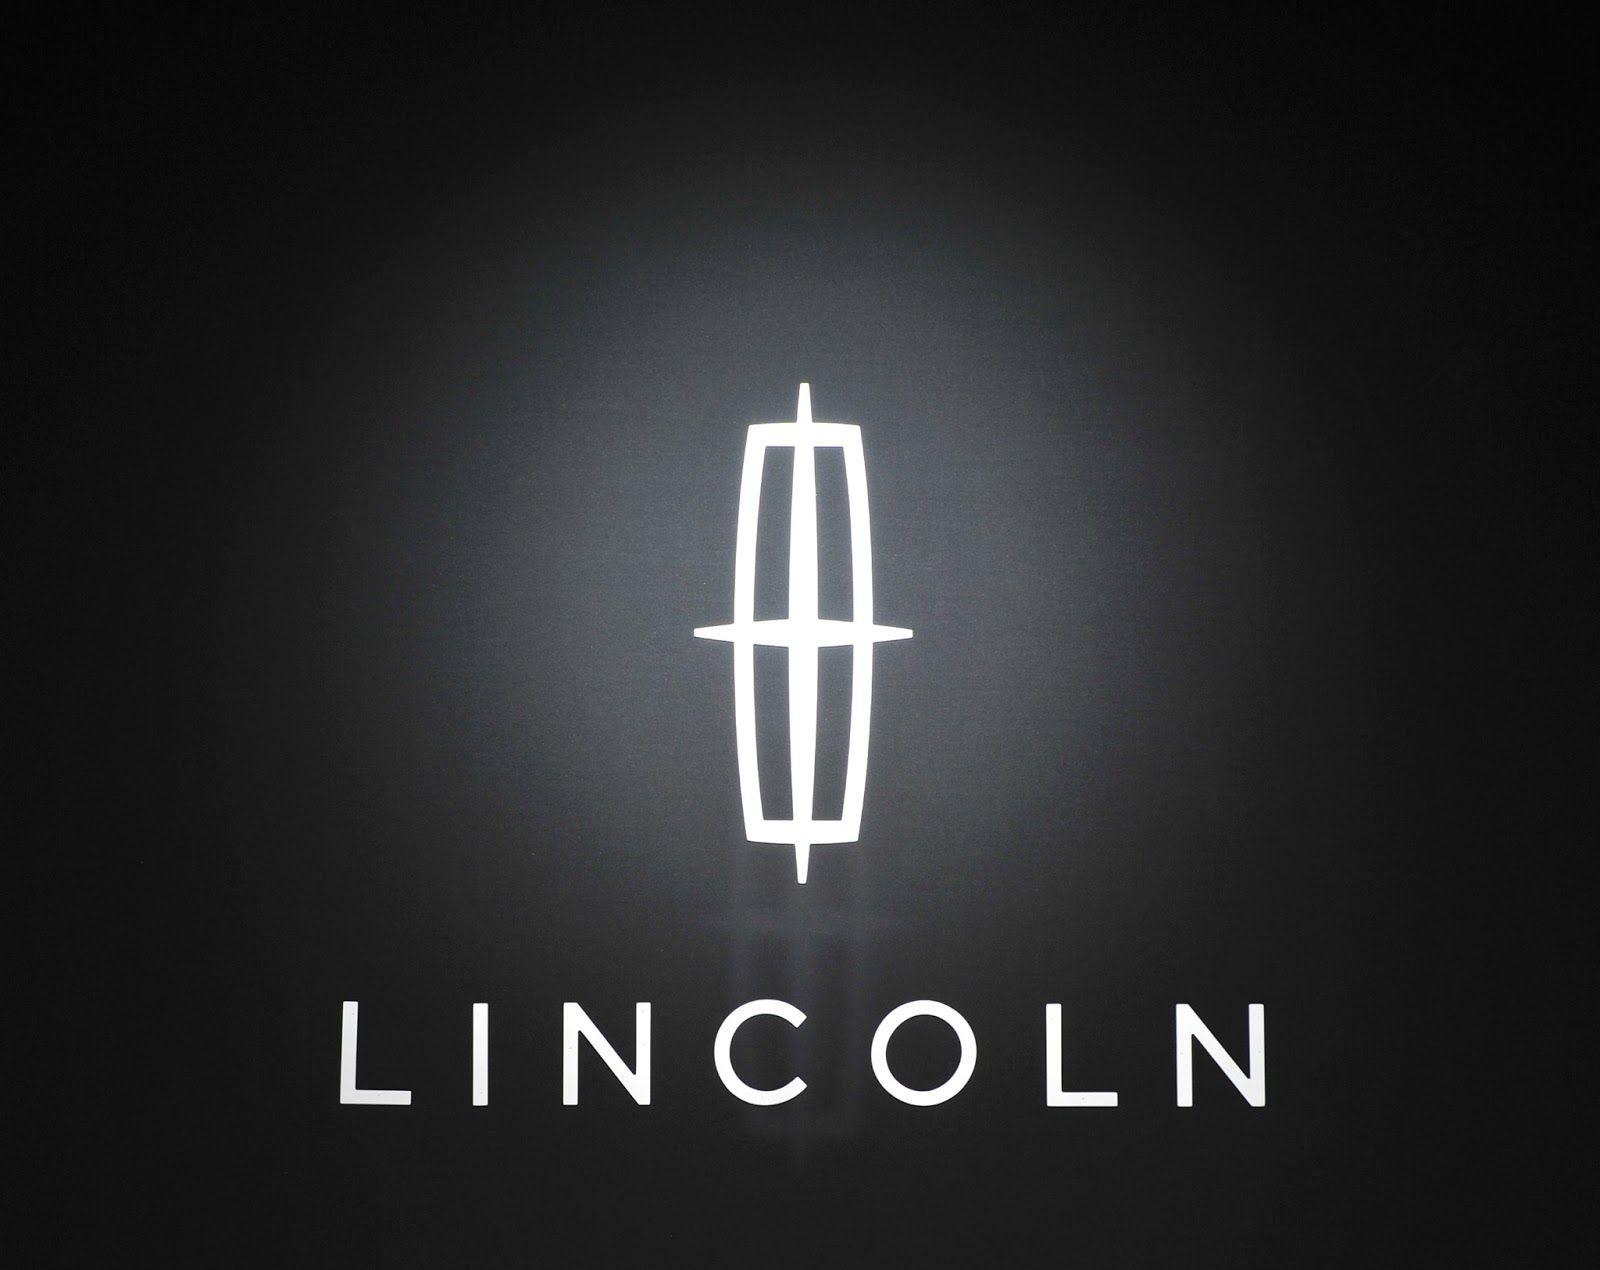 Silver Automotive Company Logo - The Color Of Lincoln Logo Is Silver. Description From Car Brand